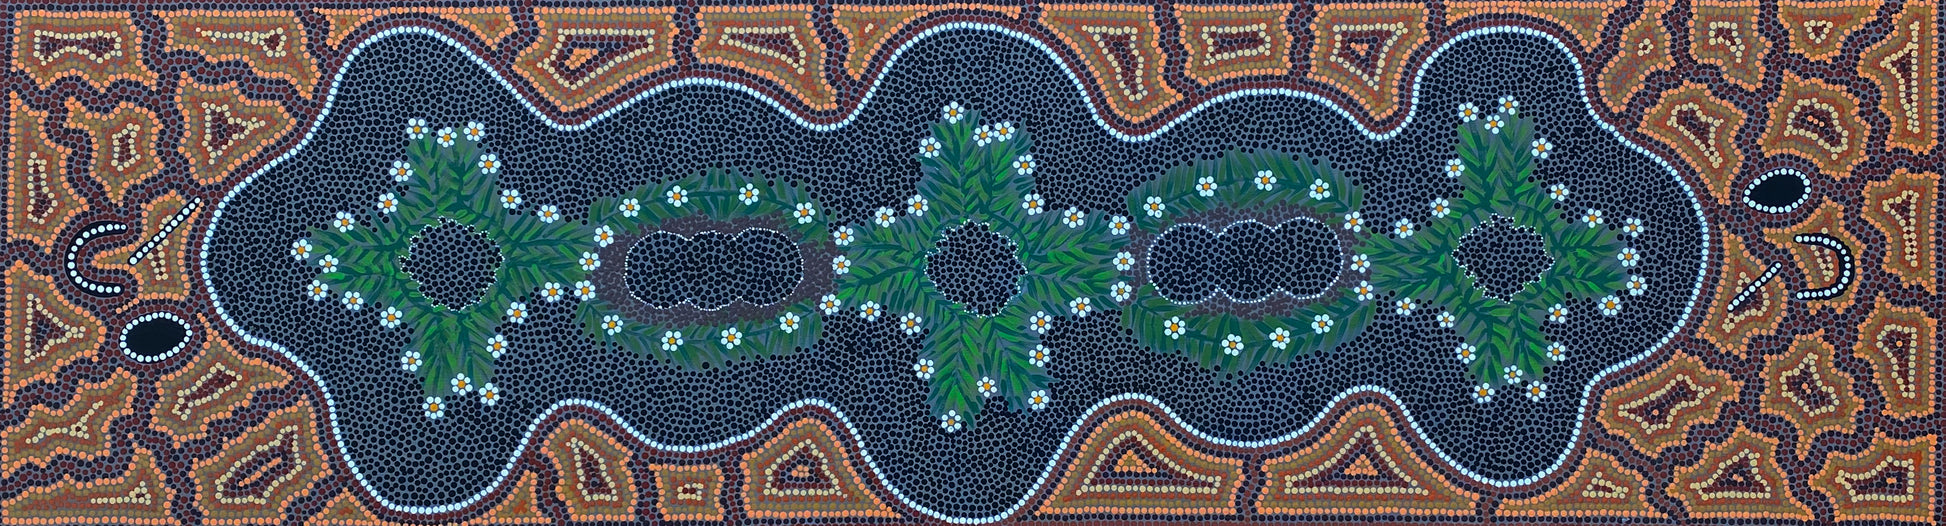 Doreen Nolan Nangala Wangunu Jukurrpa Small Black Seed Dreaming Aboriginal Art Indigenous Art Aboriginal Art Dot Painting Dot Art